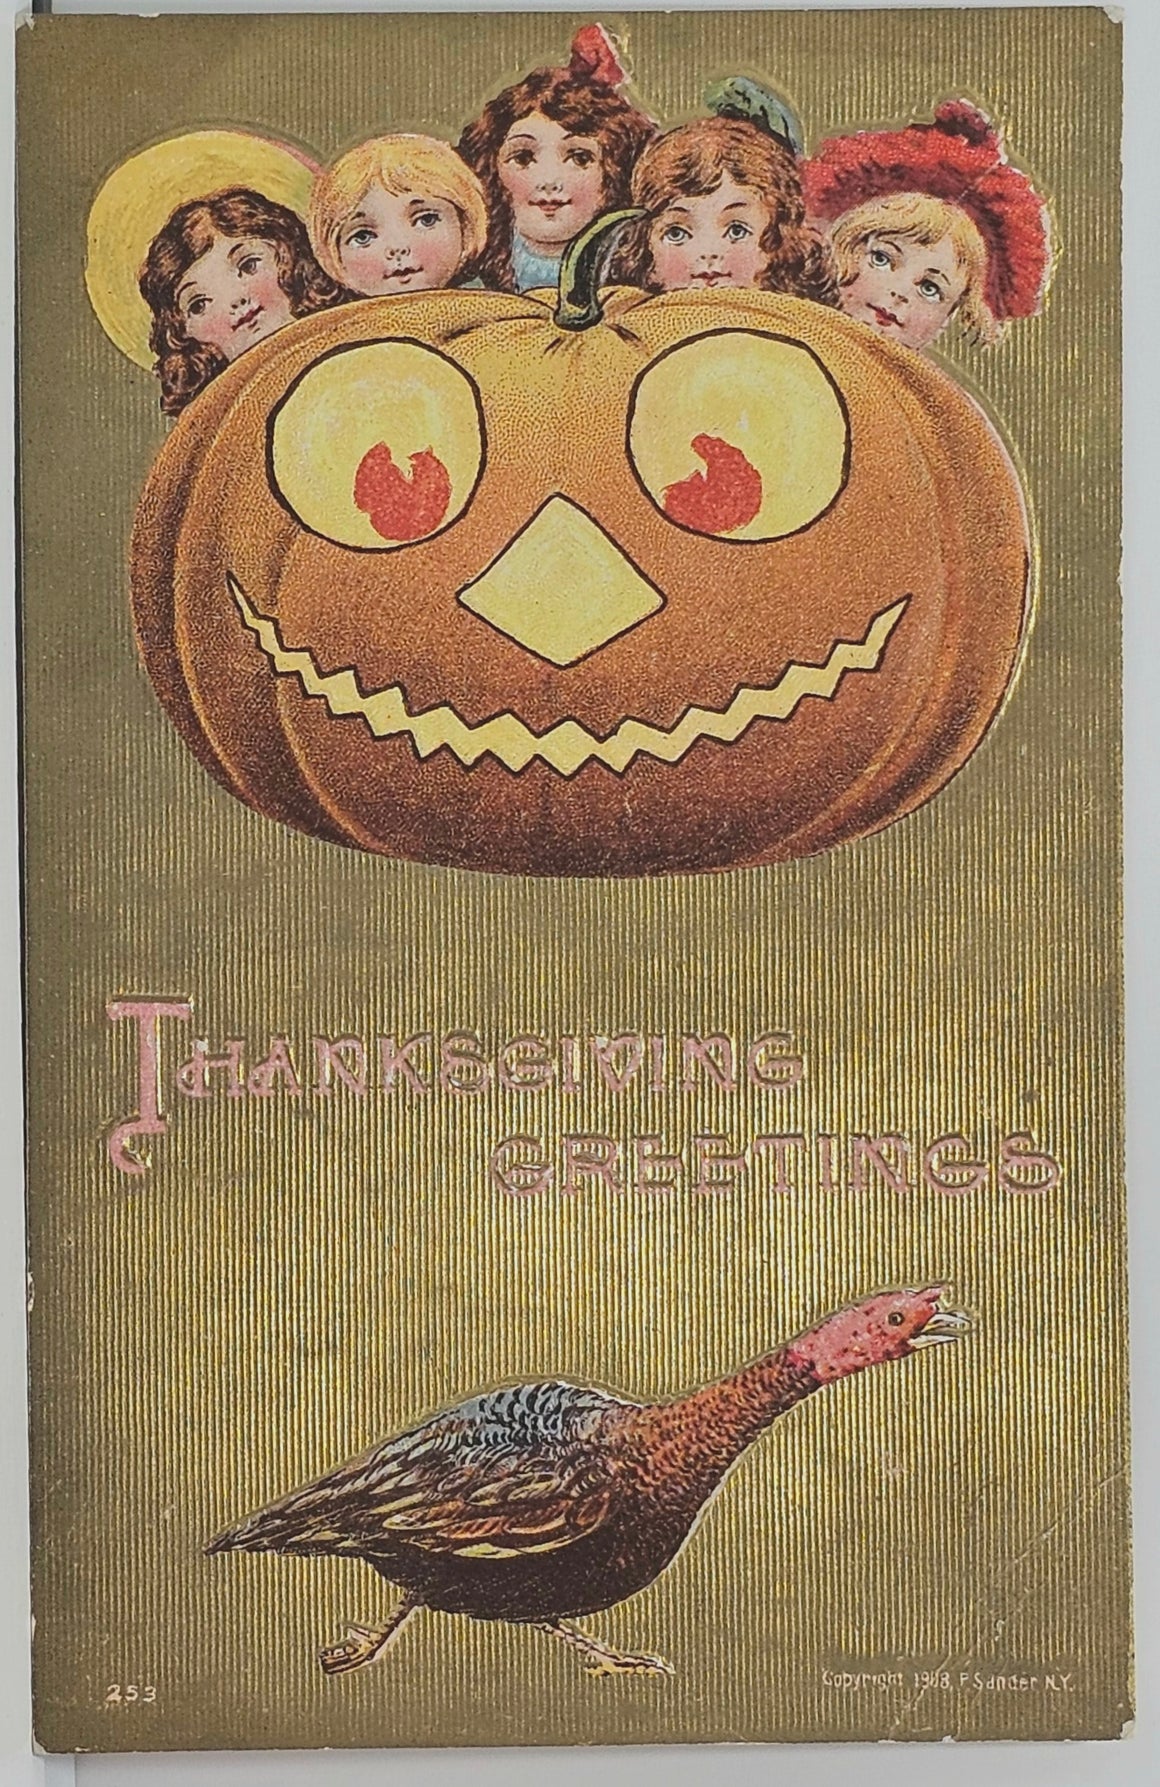 Thanksgiving Postcard Halloween Crossover Card Giant Lit JOL with Children Hiding Behind Added Turkey at Bottom